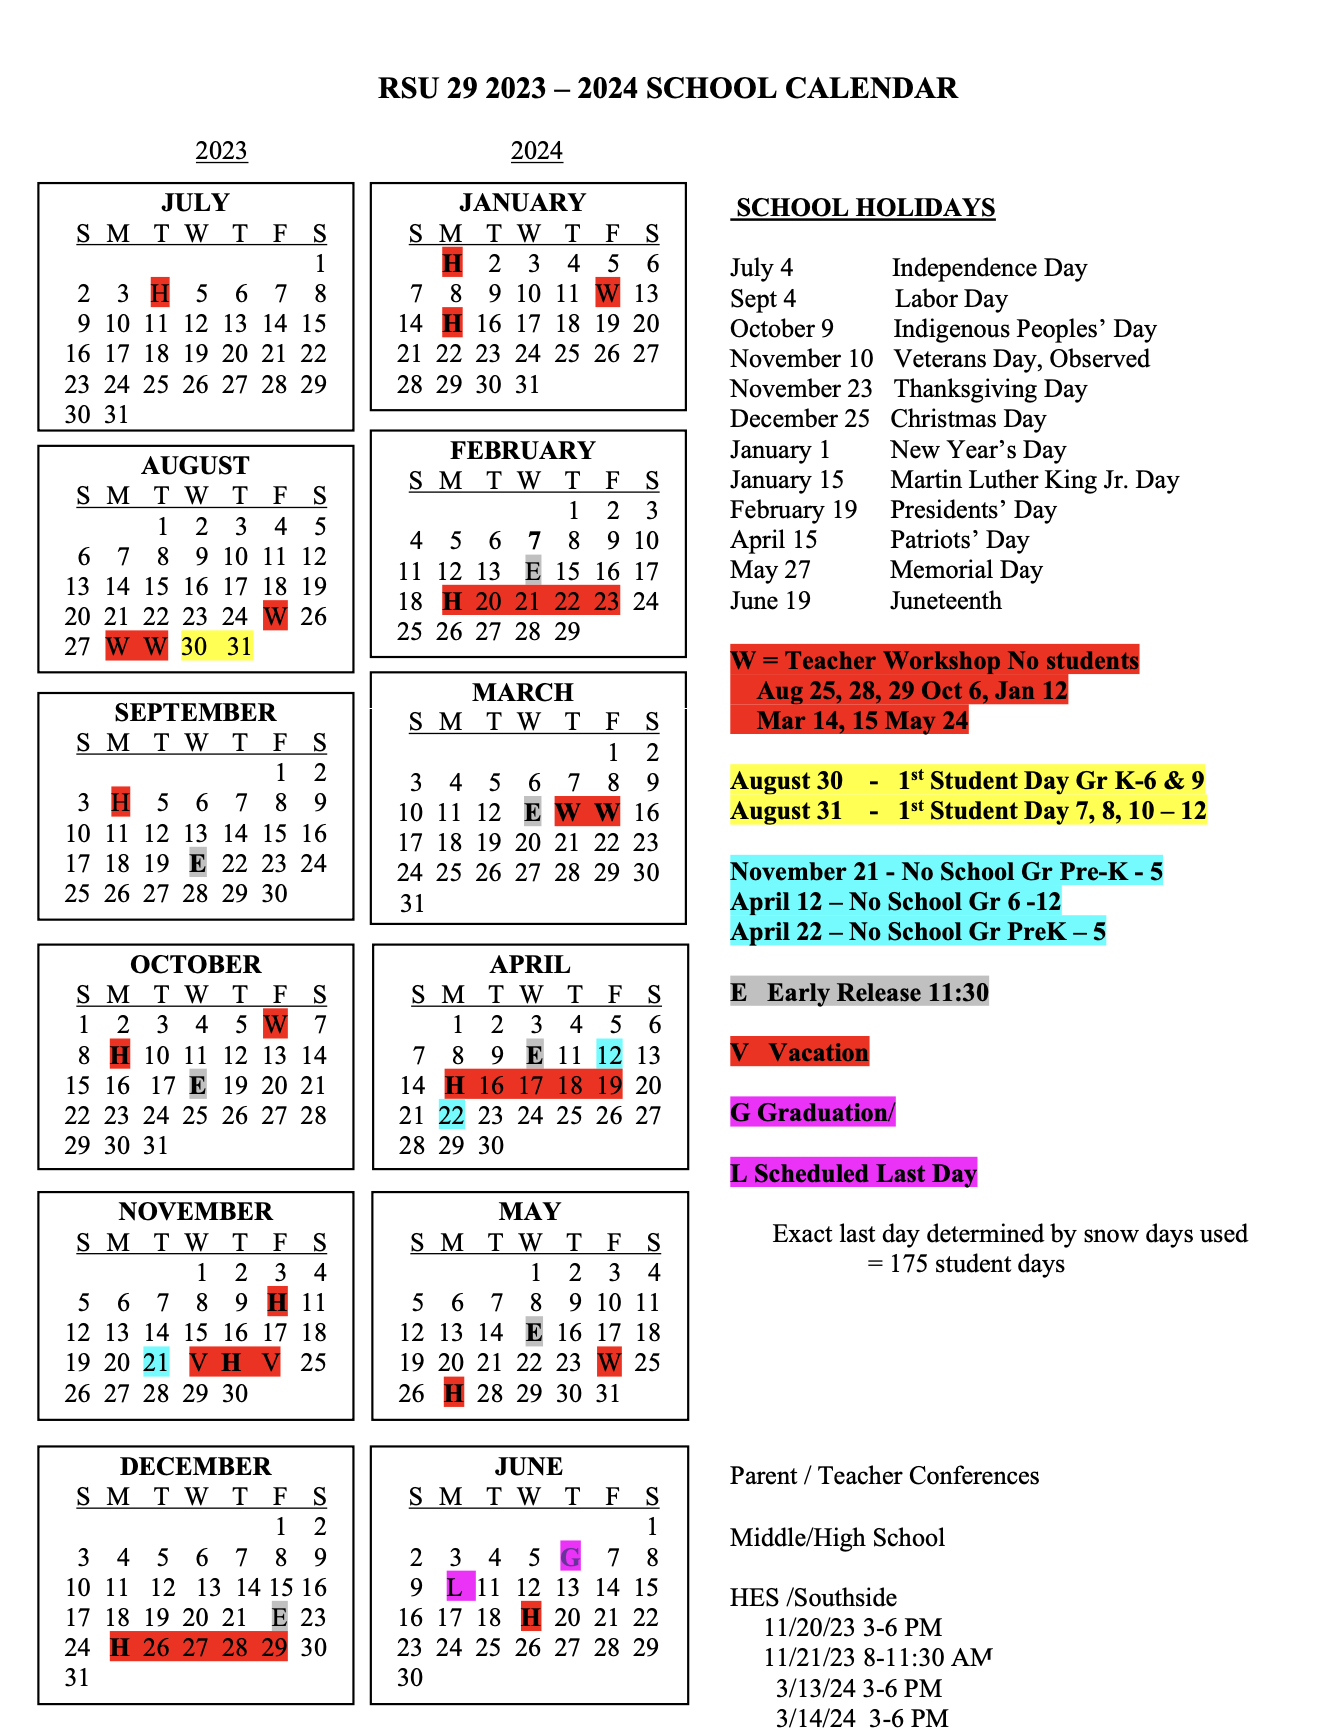 District Calendar RSU 29